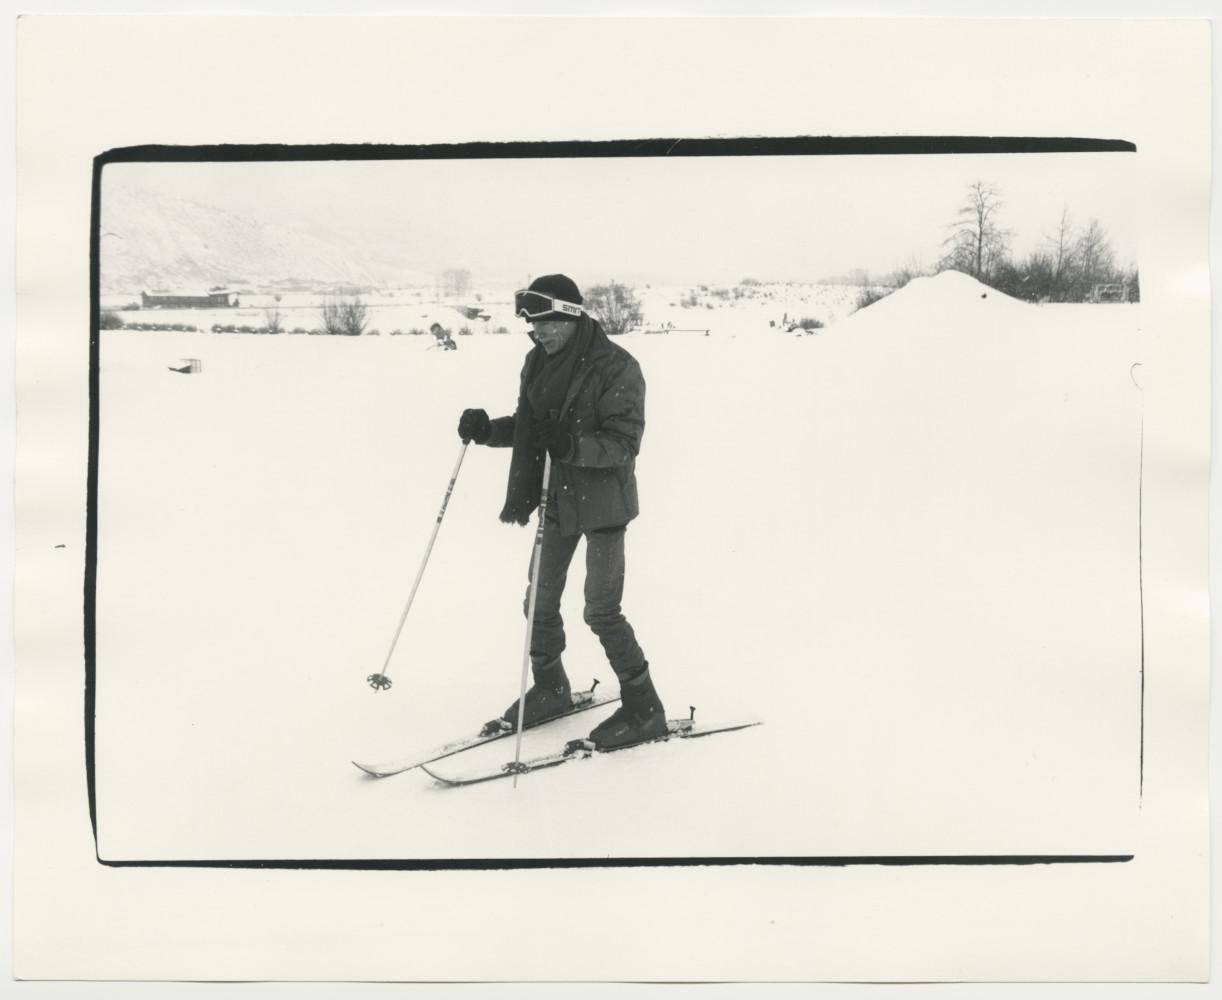 Andy Warhol on skis at Powder Pandas